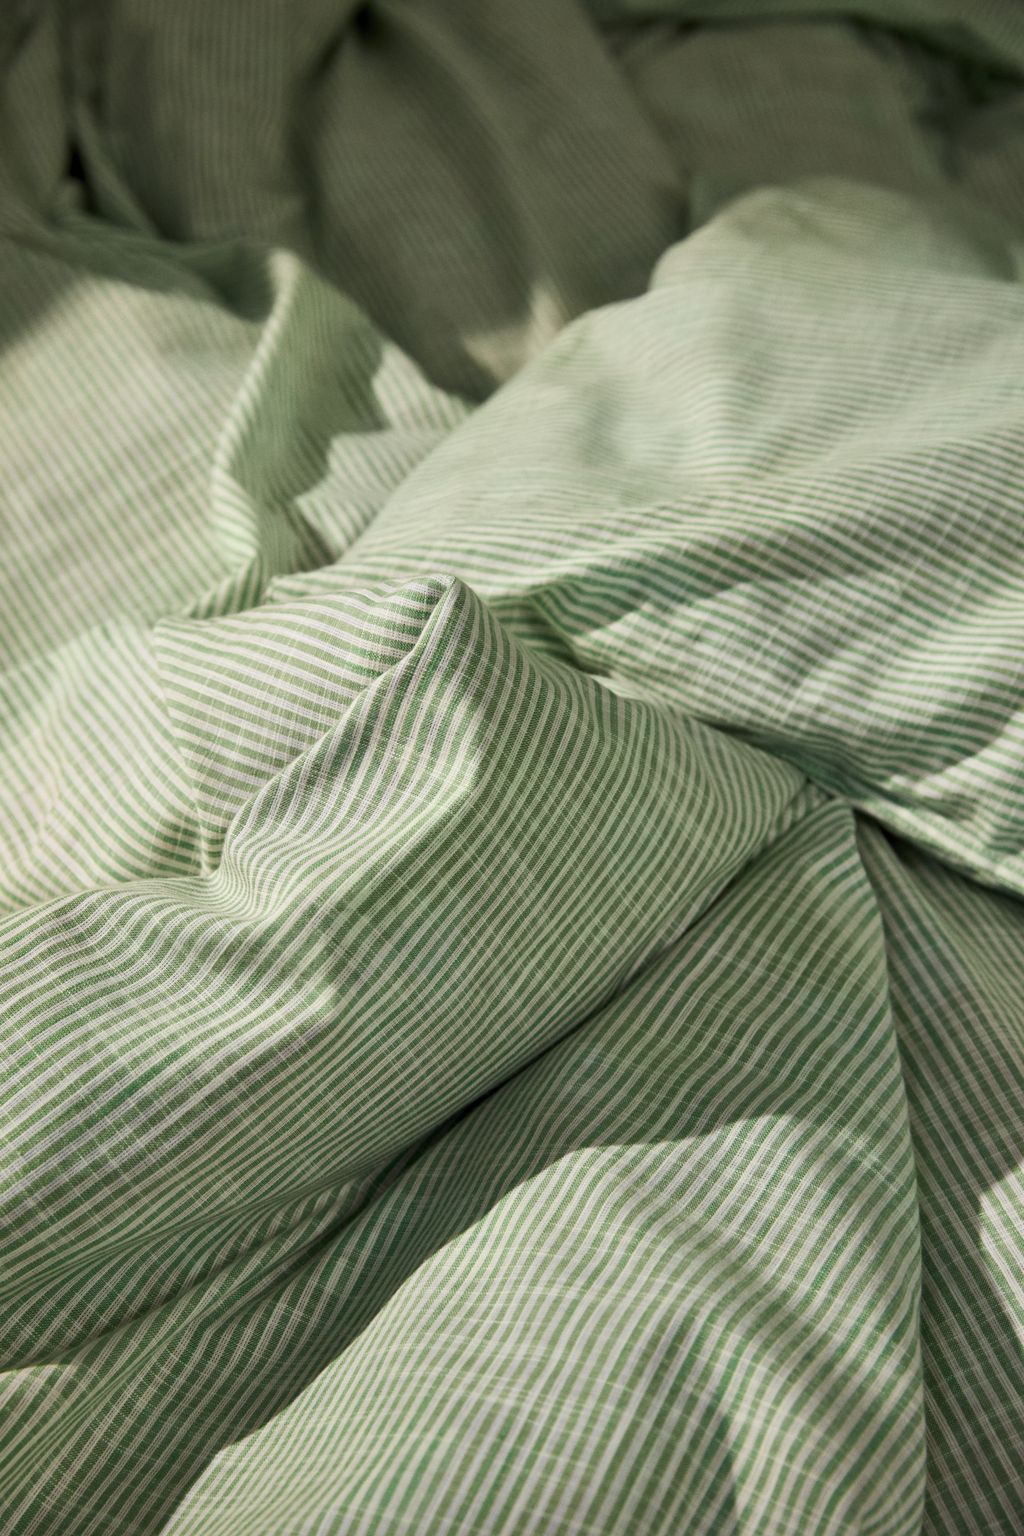 Juna Monochrome Lines Bed Linen 200 X220 Cm, Green/White